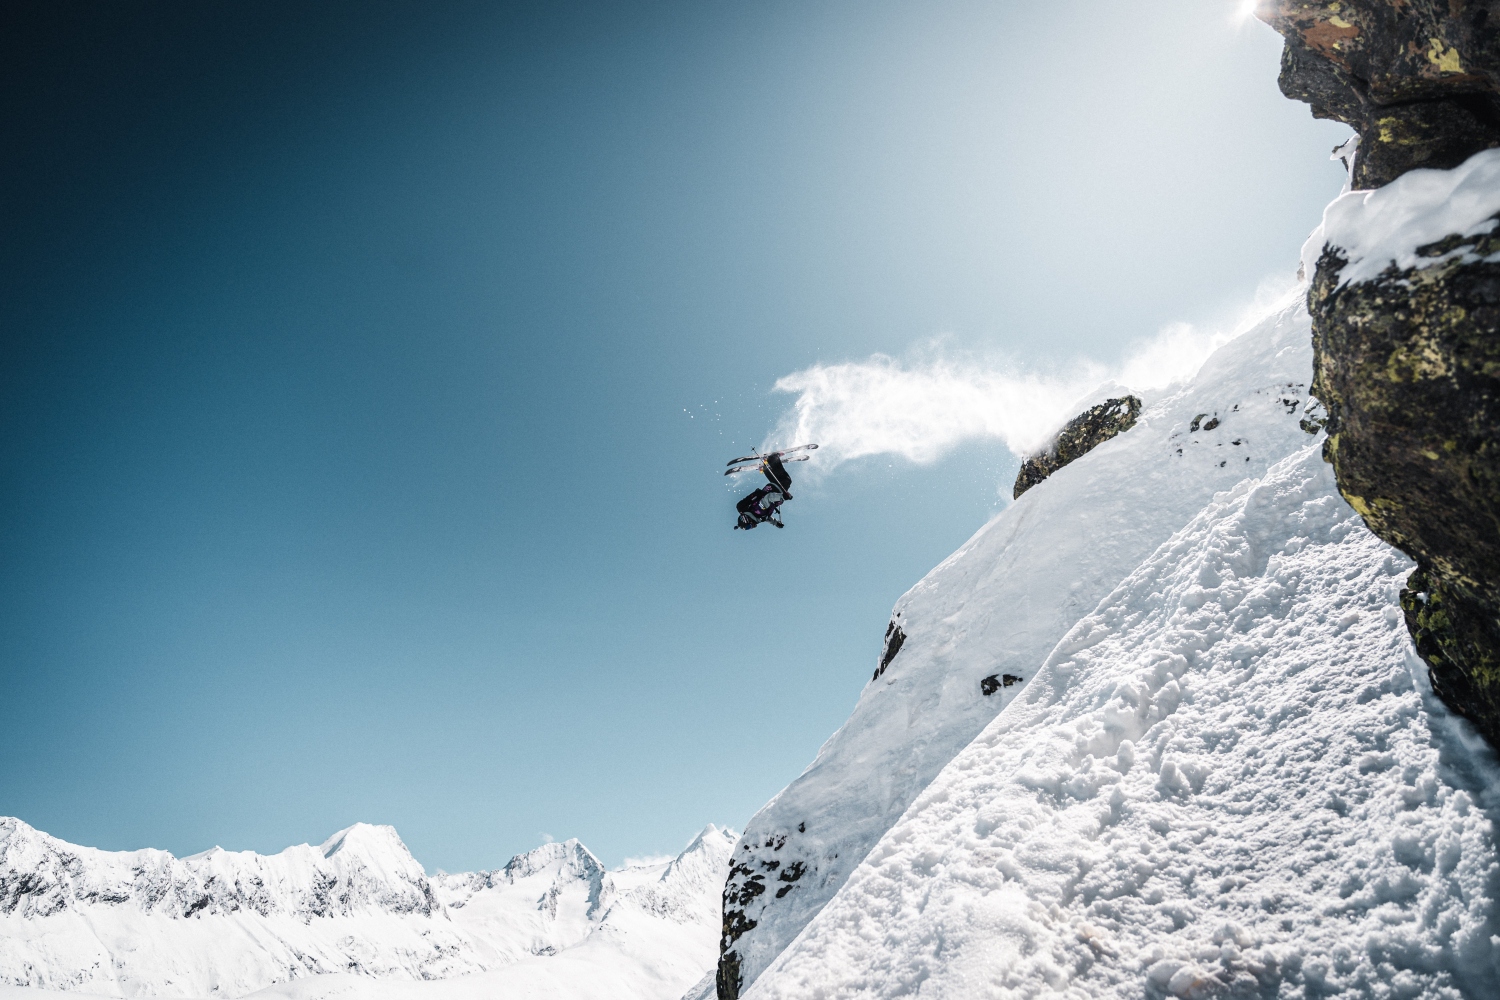 Skier jumping off snowy rock